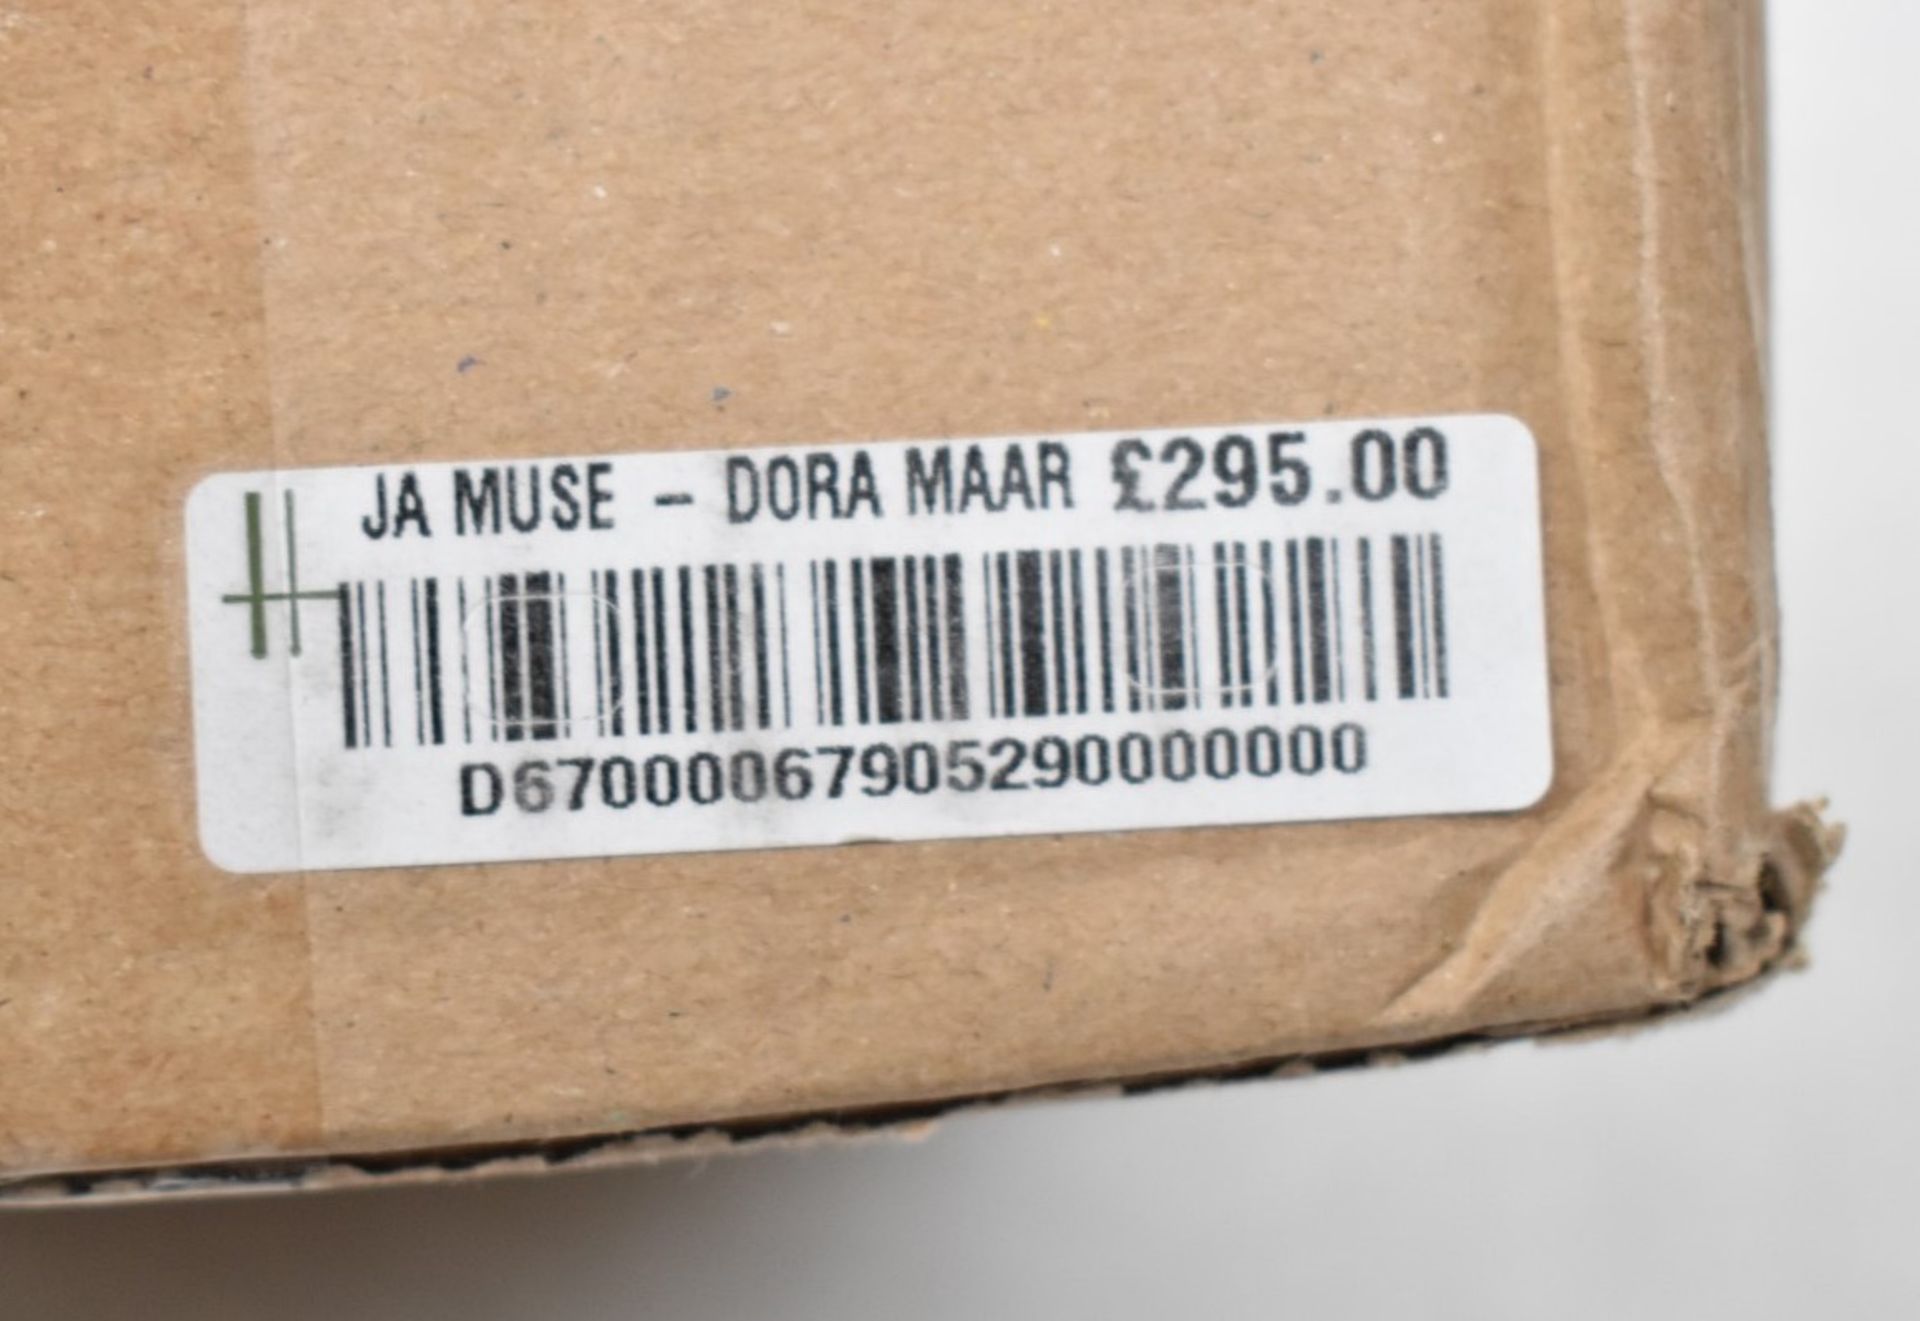 1 x JONATHAN ADLER 'Ja Muse - Dora Maar' Luxury Porcelain Vase - 23cm High - Original Price £295.00 - Image 12 of 13